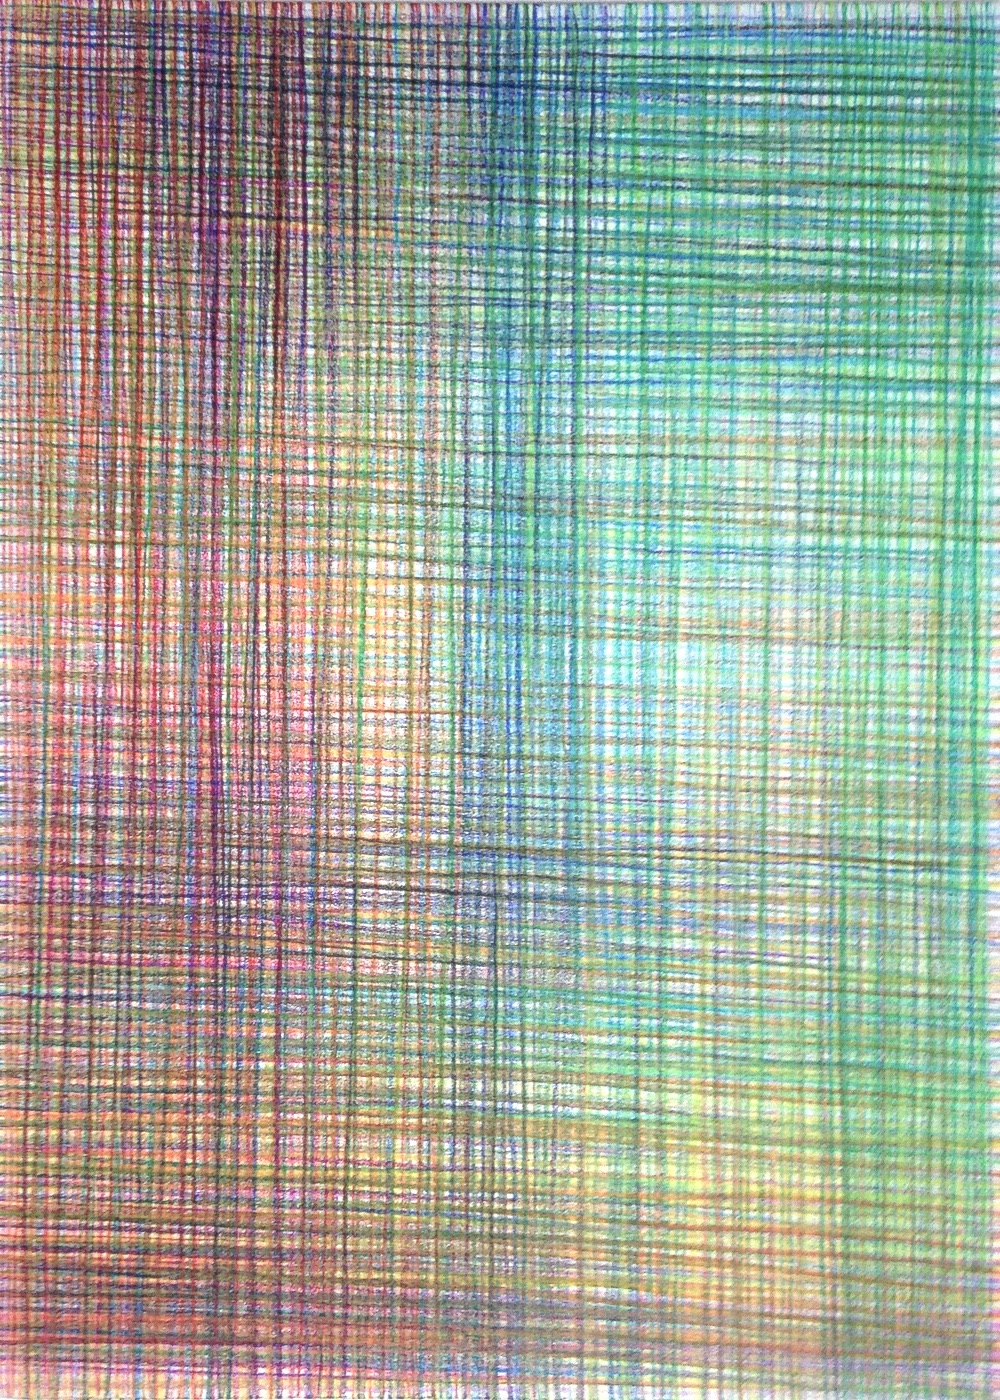 simone hamann_strings_textile7_12,7 x 17,7 colorpencil on card_2015